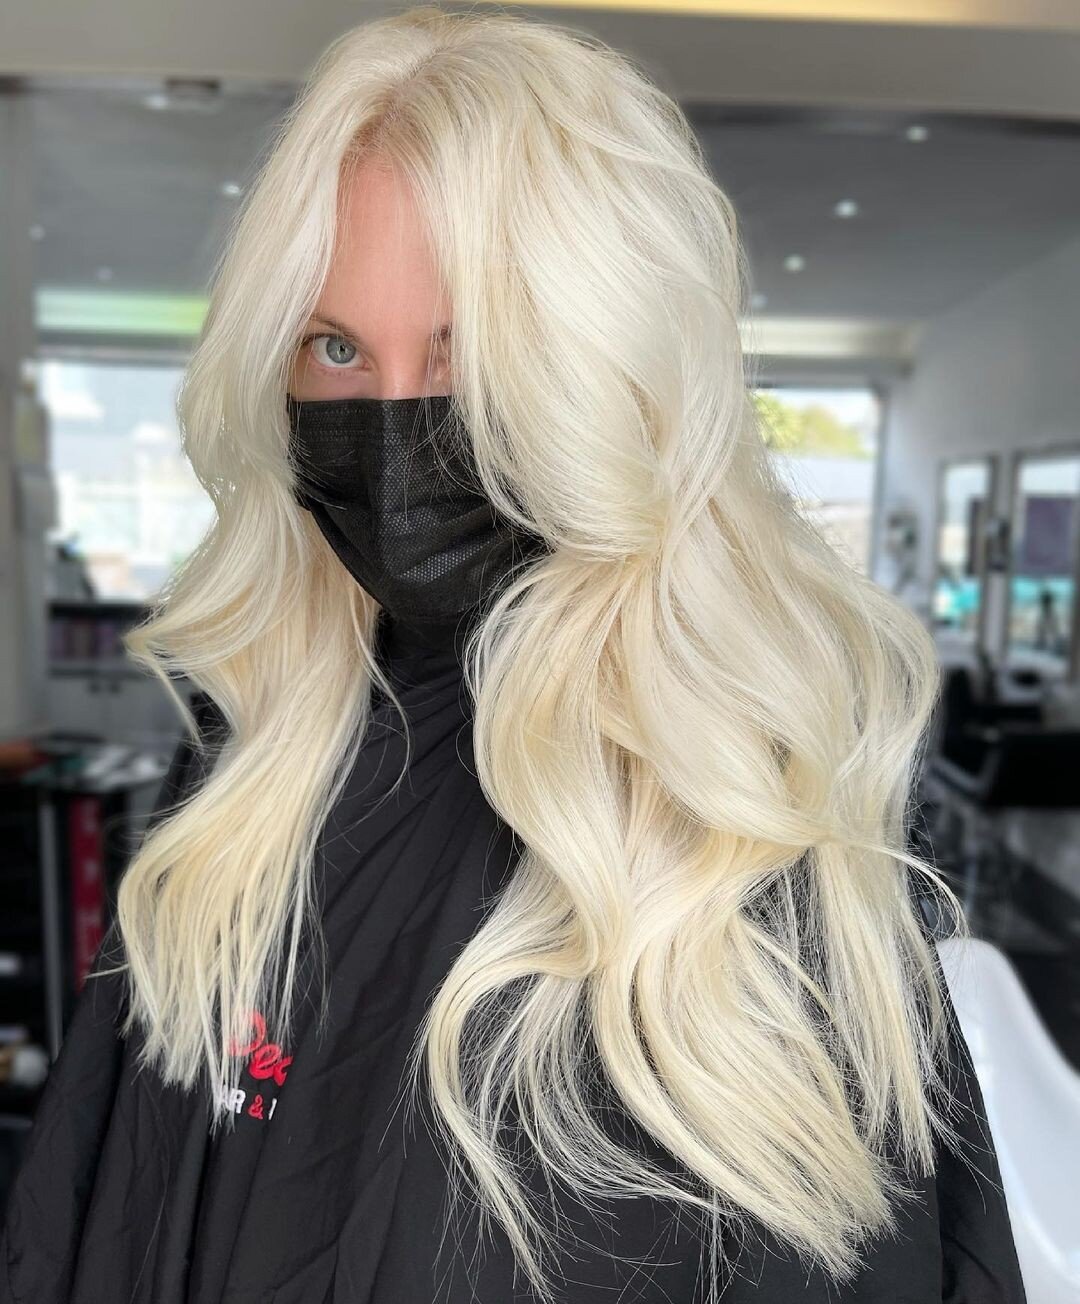 #blonderandblonder⠀⠀⠀⠀⠀⠀⠀⠀⠀⠀⠀⠀⠀⠀⠀⠀⠀⠀⠀⠀⠀⠀⠀⠀⠀⠀
✂️🎨: @josiewiltoncolourspecialist ⠀⠀⠀⠀⠀⠀⠀⠀⠀⠀⠀⠀⠀⠀⠀⠀⠀⠀⠀⠀⠀⠀⠀⠀⠀⠀⠀⠀
🌎Follow: @blonderand_blonder for blonde hair styles &amp; inspiration⠀⠀⠀⠀⠀⠀⠀⠀⠀⠀⠀⠀⠀⠀⠀⠀⠀⠀⠀⠀⠀⠀⠀⠀⠀⠀⠀⠀⠀⠀⠀⠀⠀⠀⠀⠀⠀⠀⠀⠀⠀
-⠀⠀⠀⠀⠀⠀⠀⠀⠀⠀⠀⠀⠀⠀⠀⠀
@GEOOILHAIR